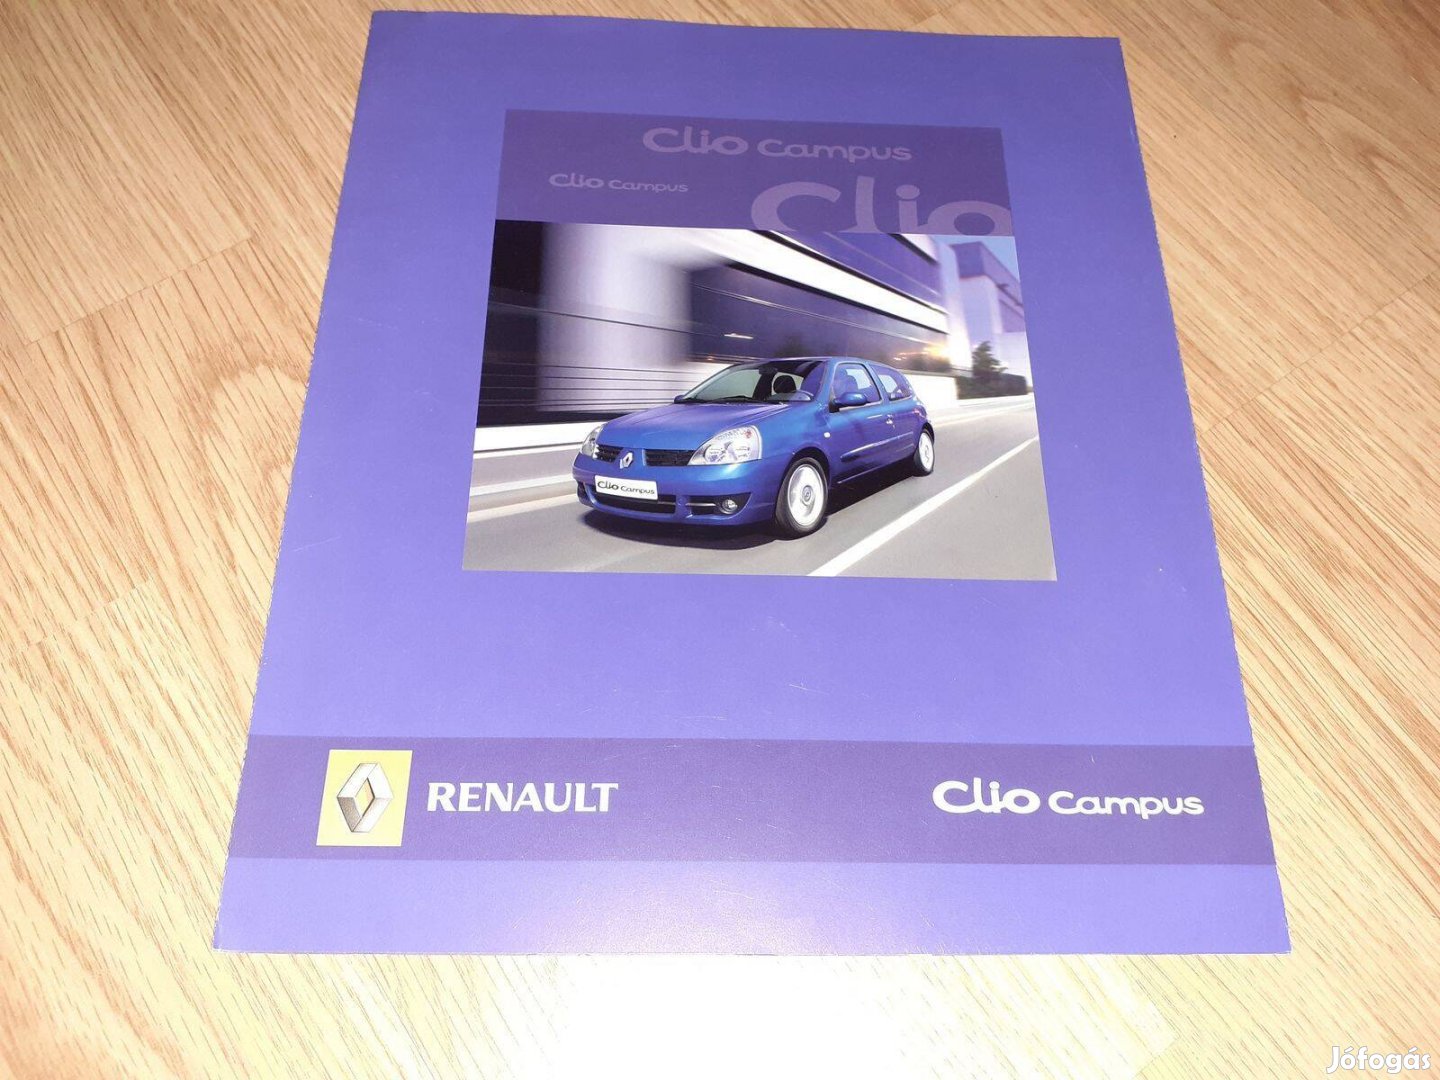 Renault Clio Campus prospektus - 2006, magyar nyelvű